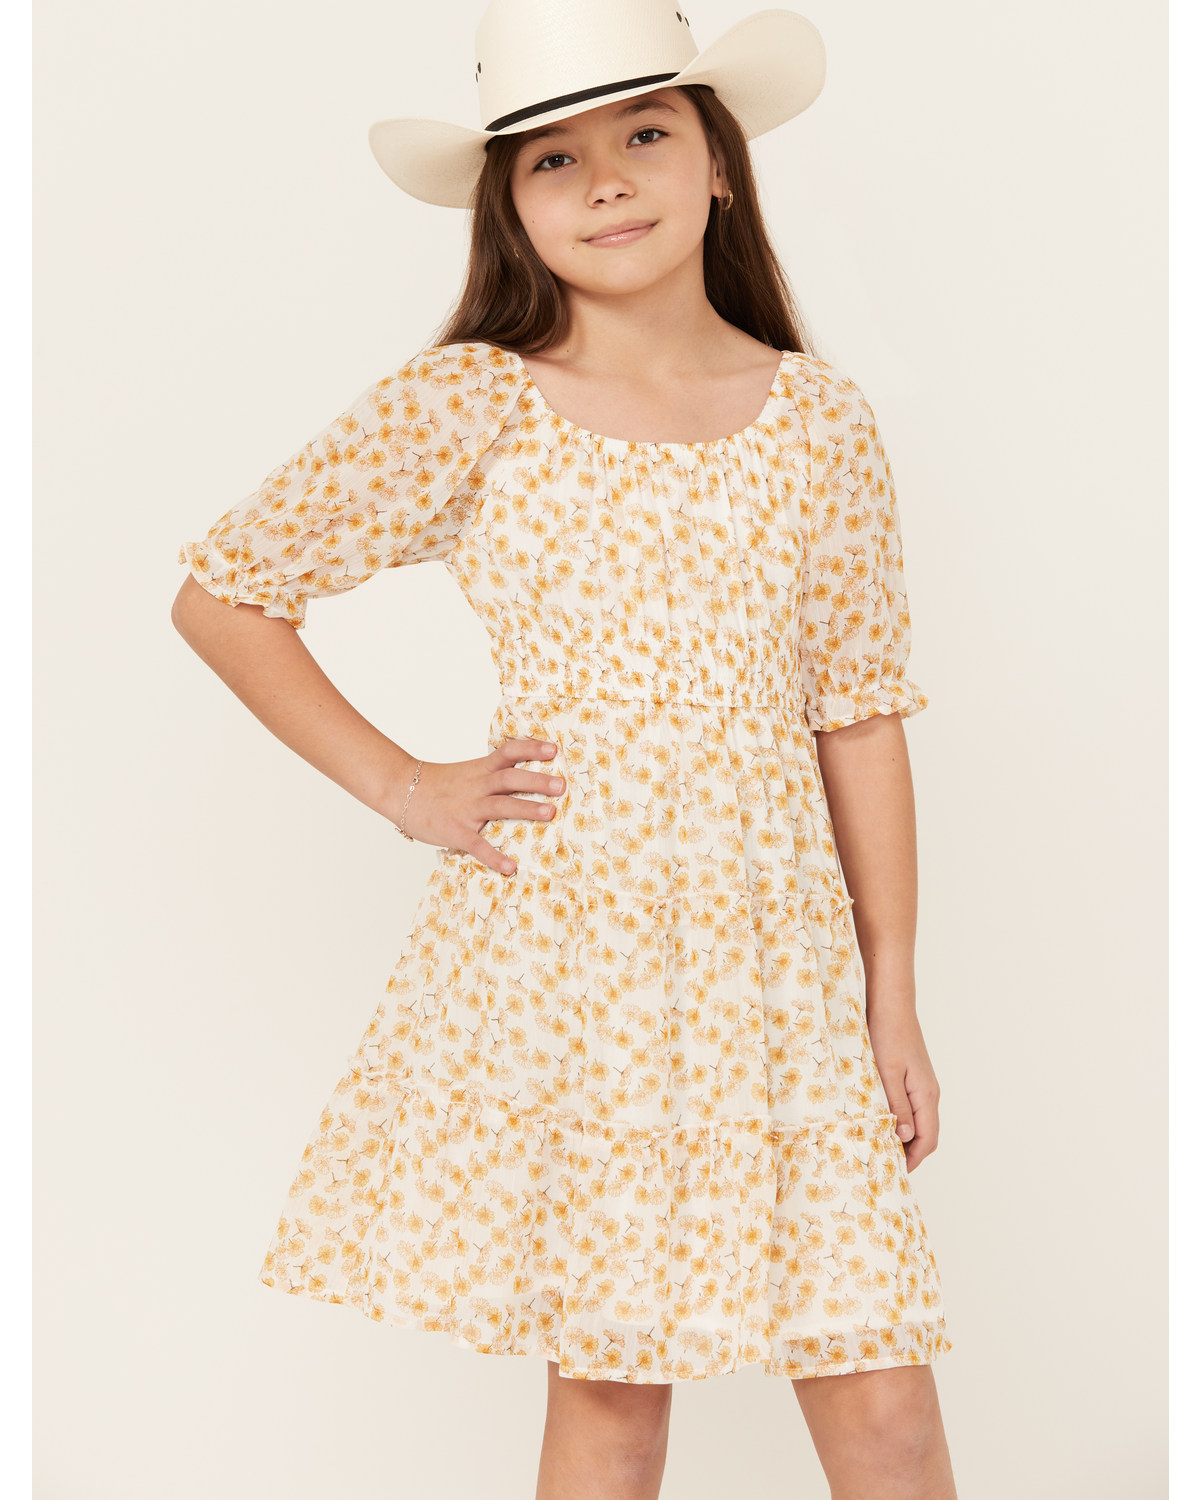 Trixxi Girls' Daisy Print Ruffle Dress